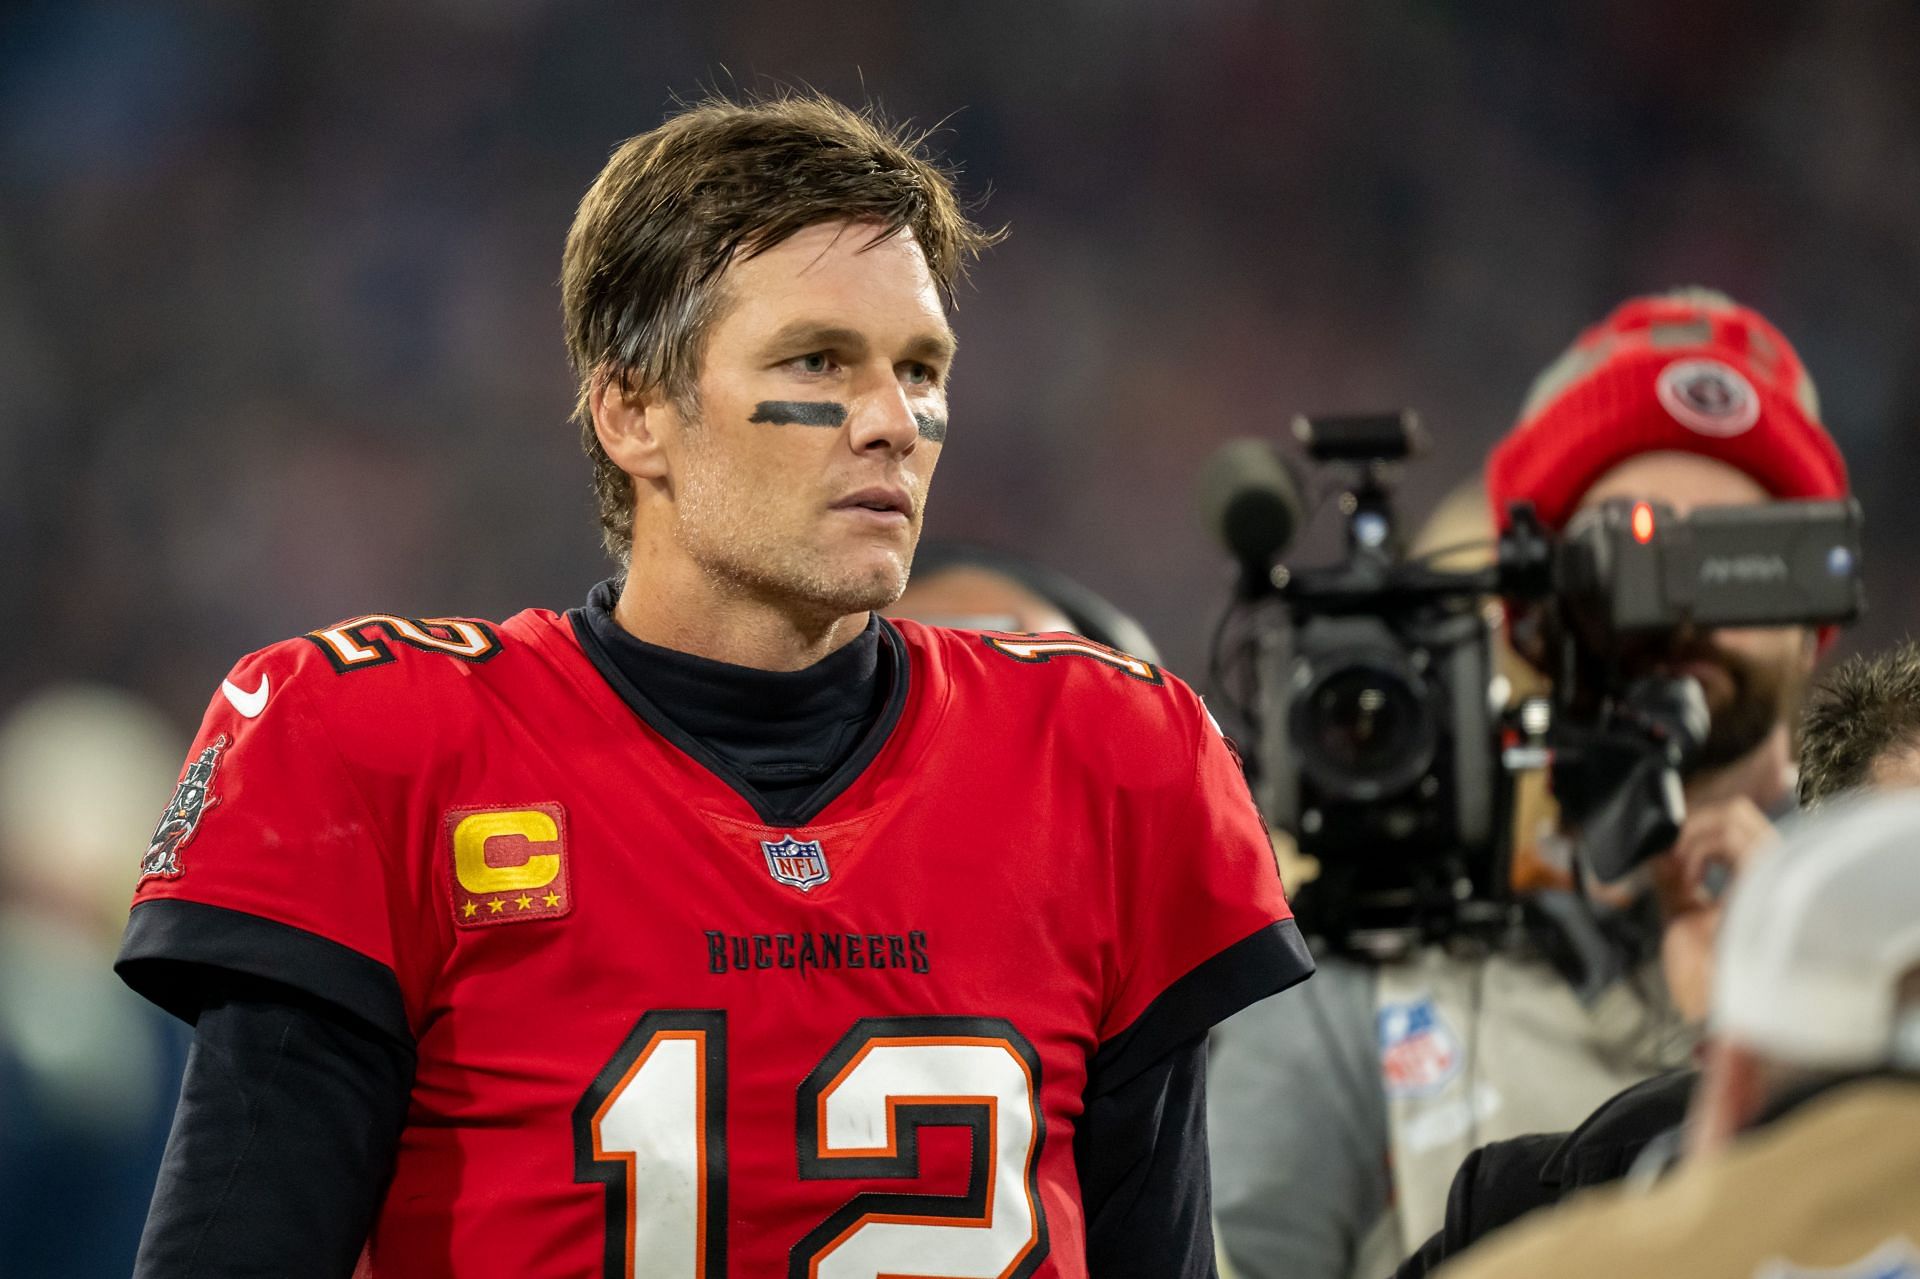 American football superstar Tom Brady announces retirement, this